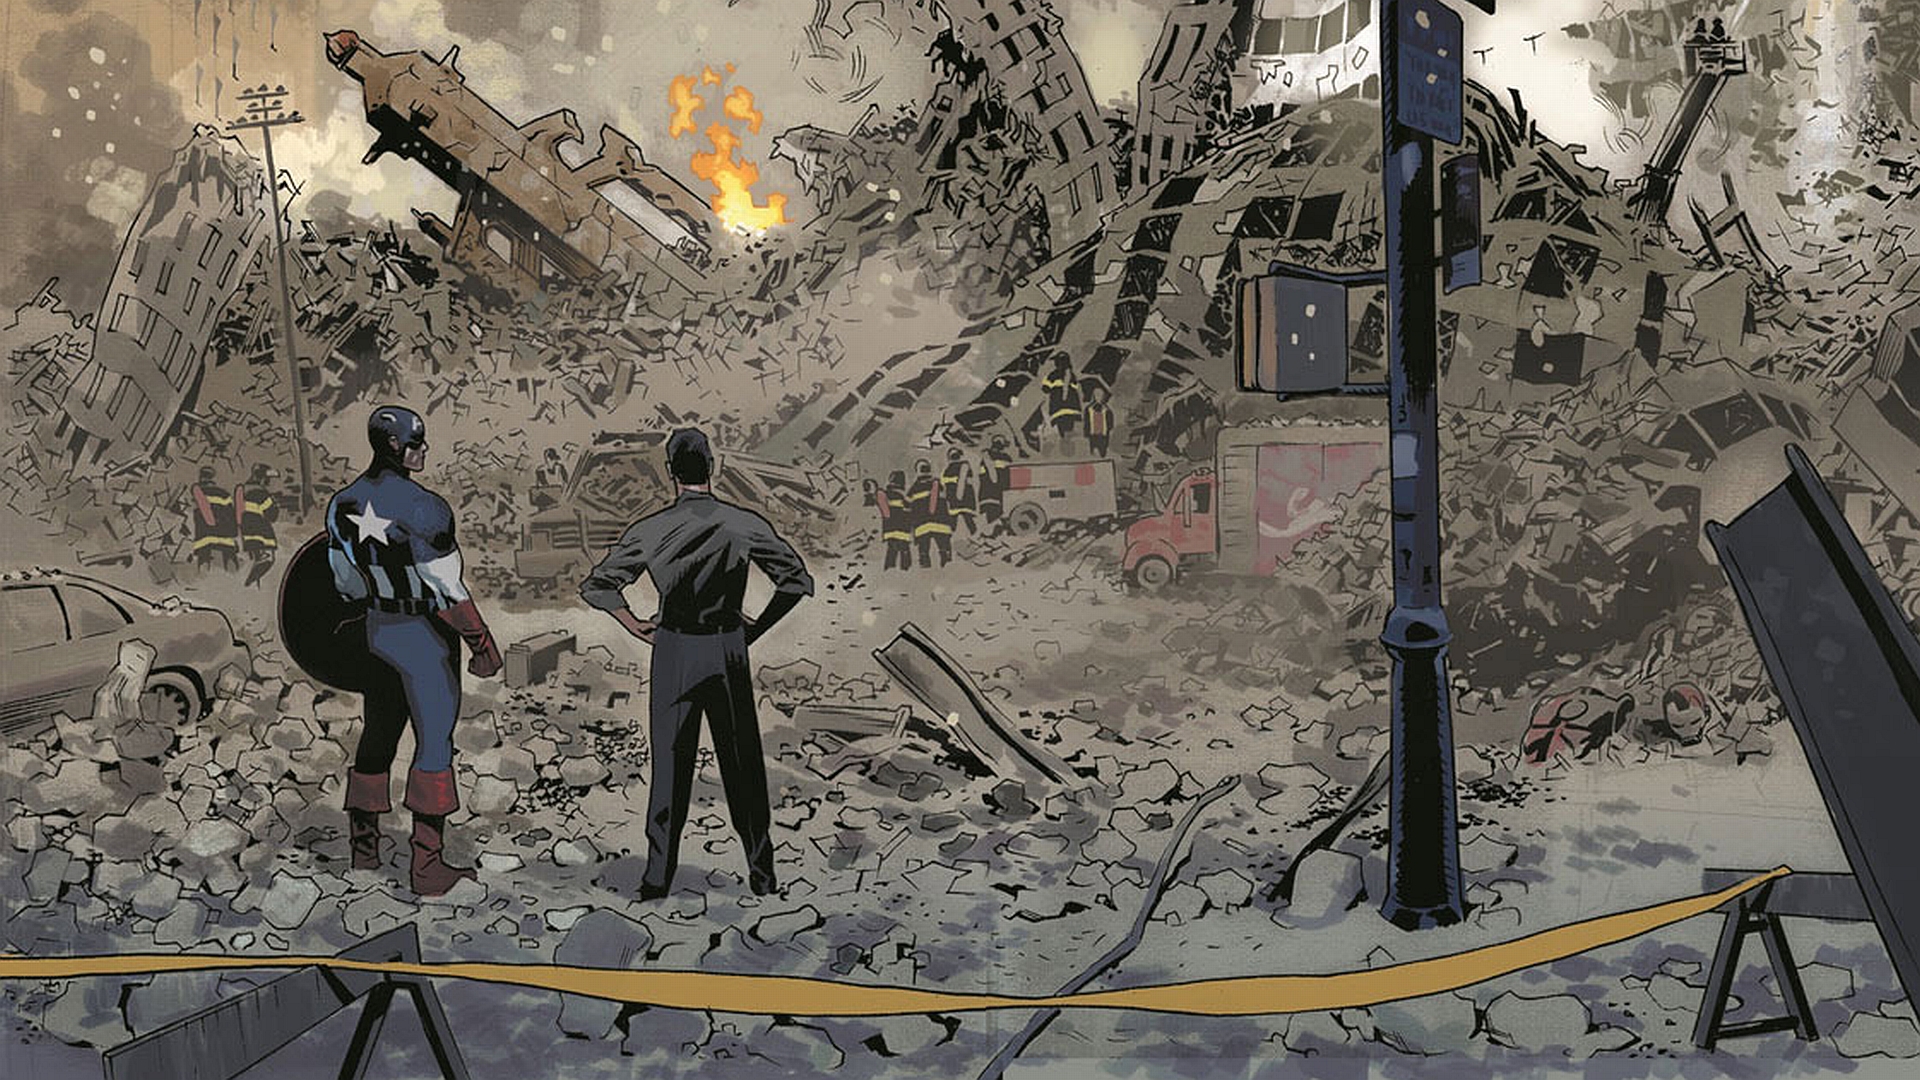 Avengers comic featuring Captain America in a vibrant desktop wallpaper.